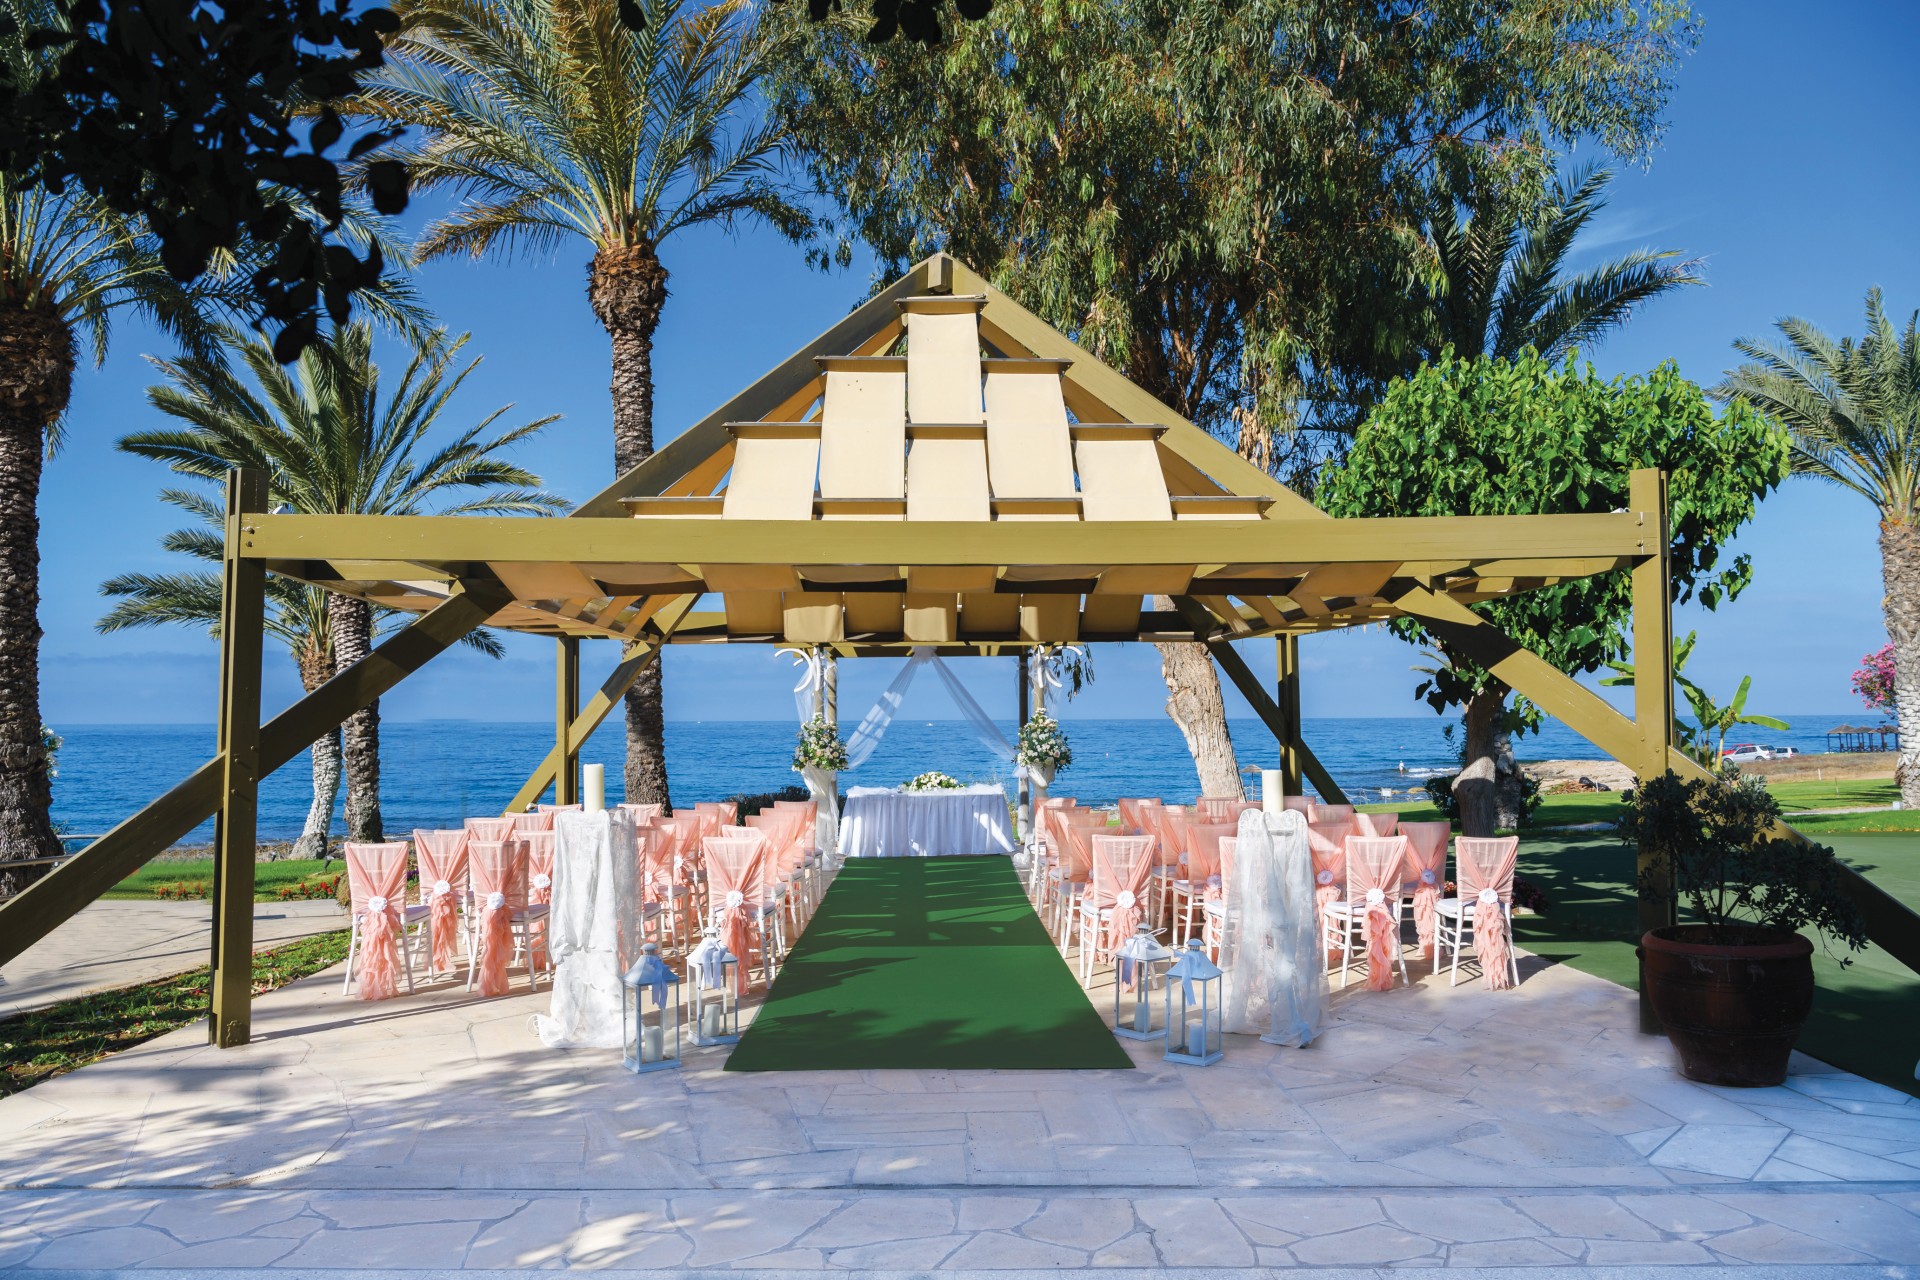 90 ATHENA BEACH HOTEL PERSEFONI WEDDING GAZEBO